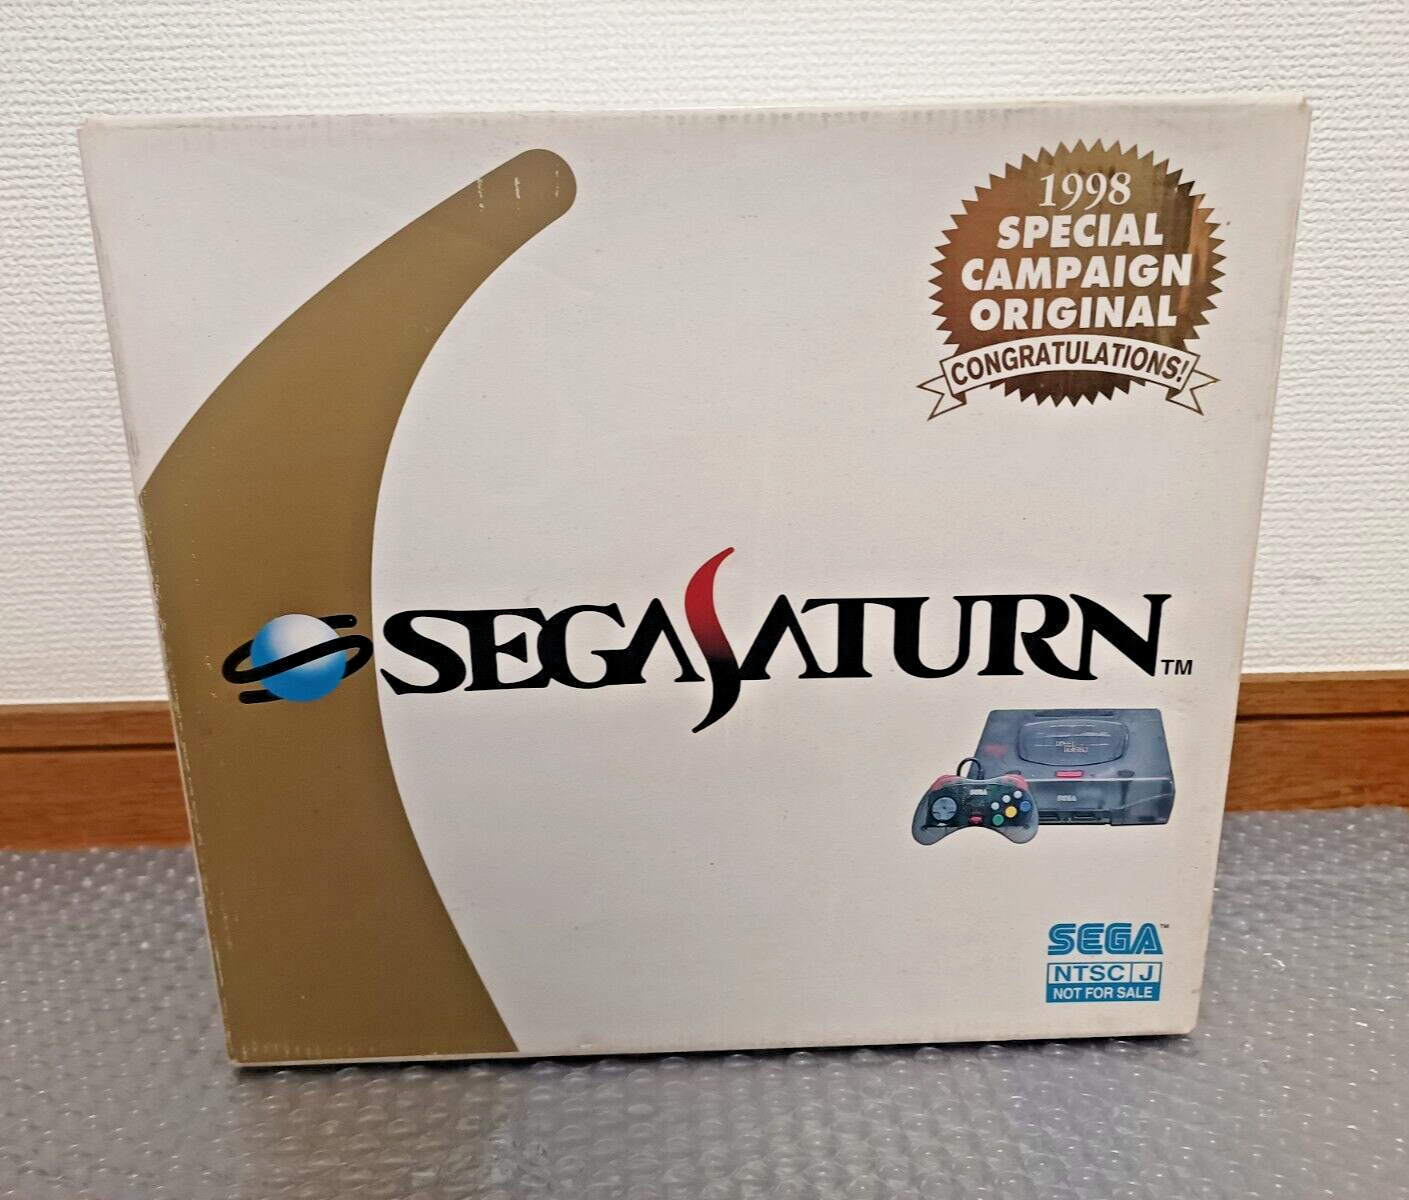  Sega Saturn 1998 Special Campaign Console